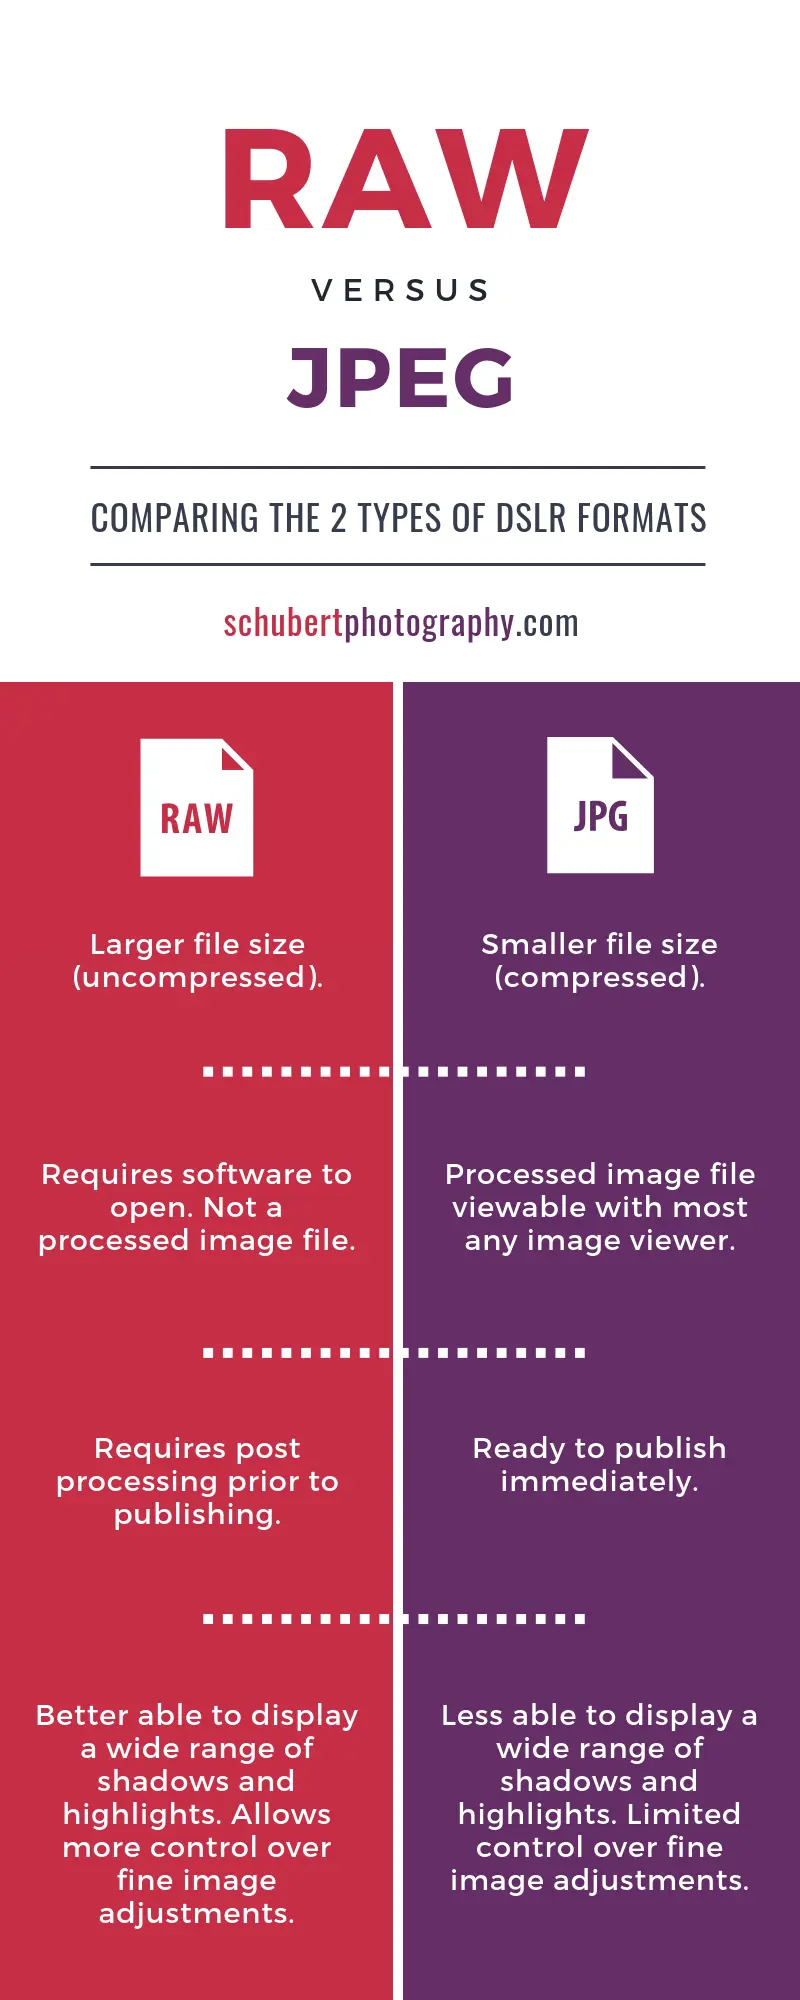 RAW versus JPEG Comparison Chart Infographic